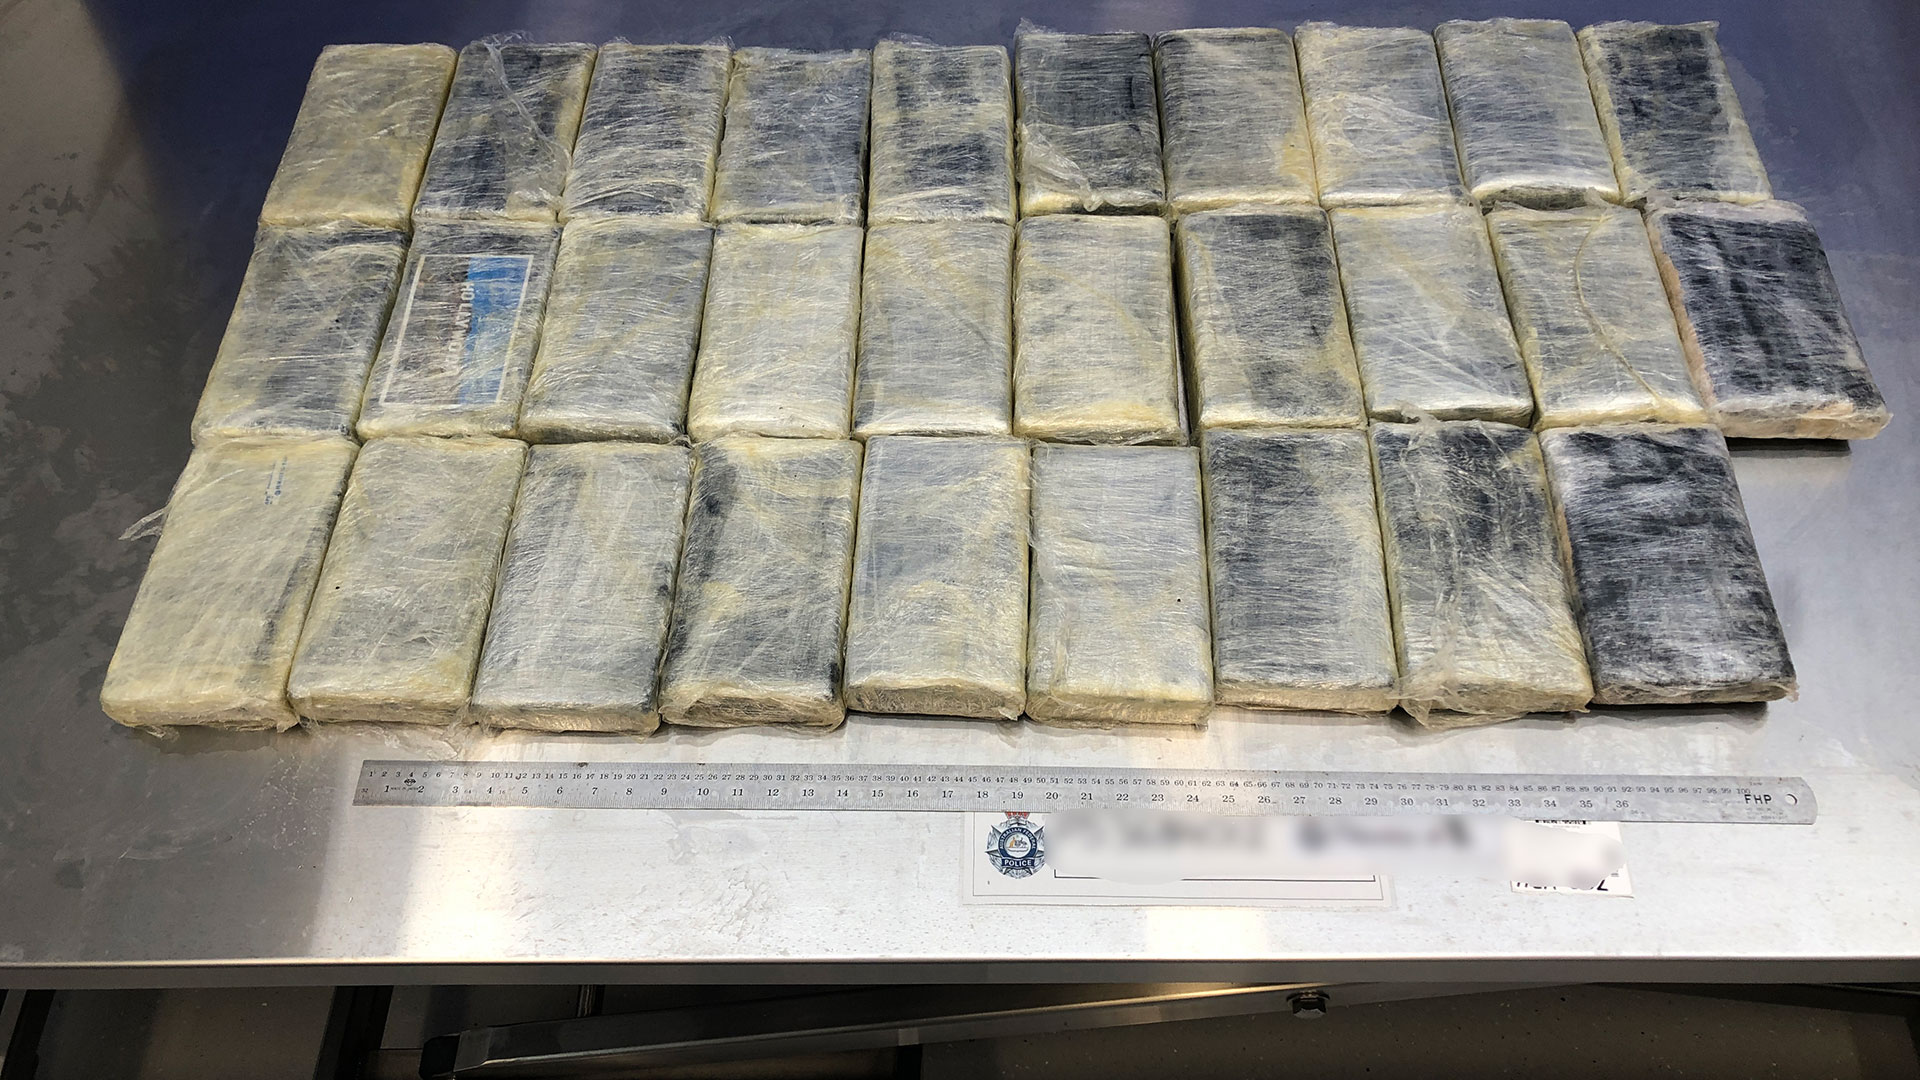 Australia decomisó más de 800 kilos de cocaína de un barco proveniente de Argentina